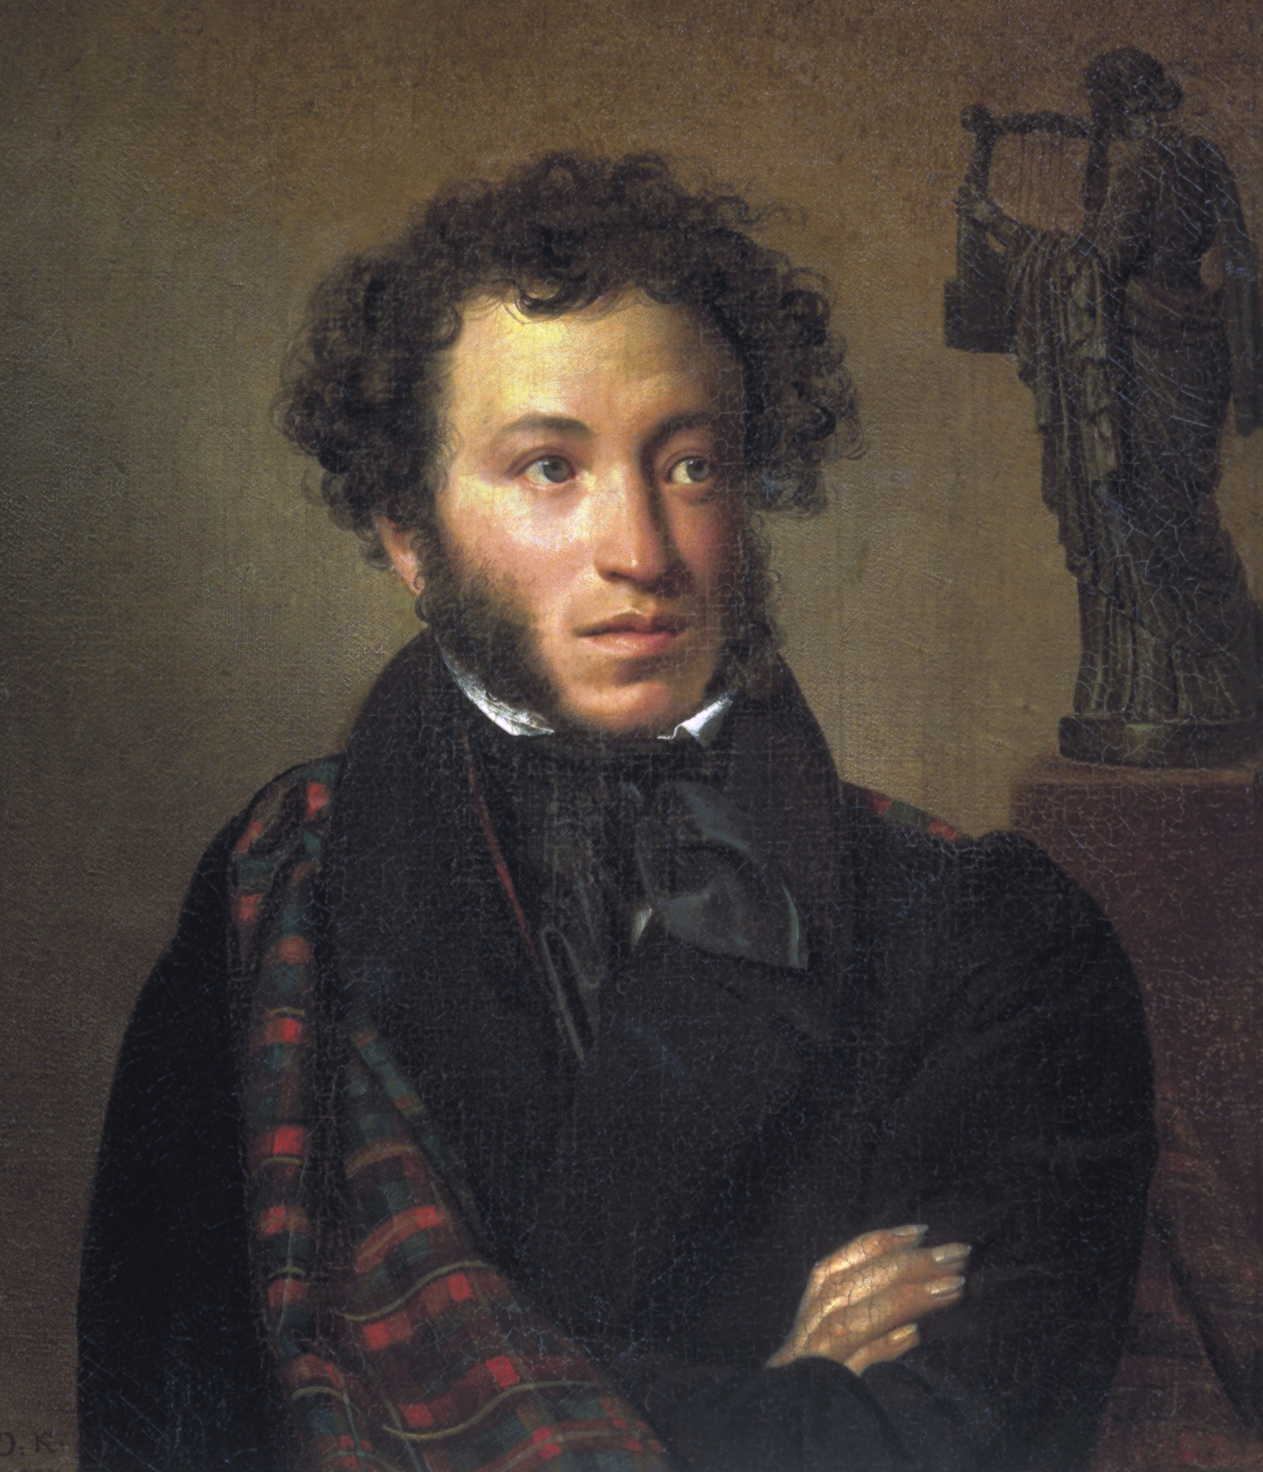 Photo of Alexander Pushkin